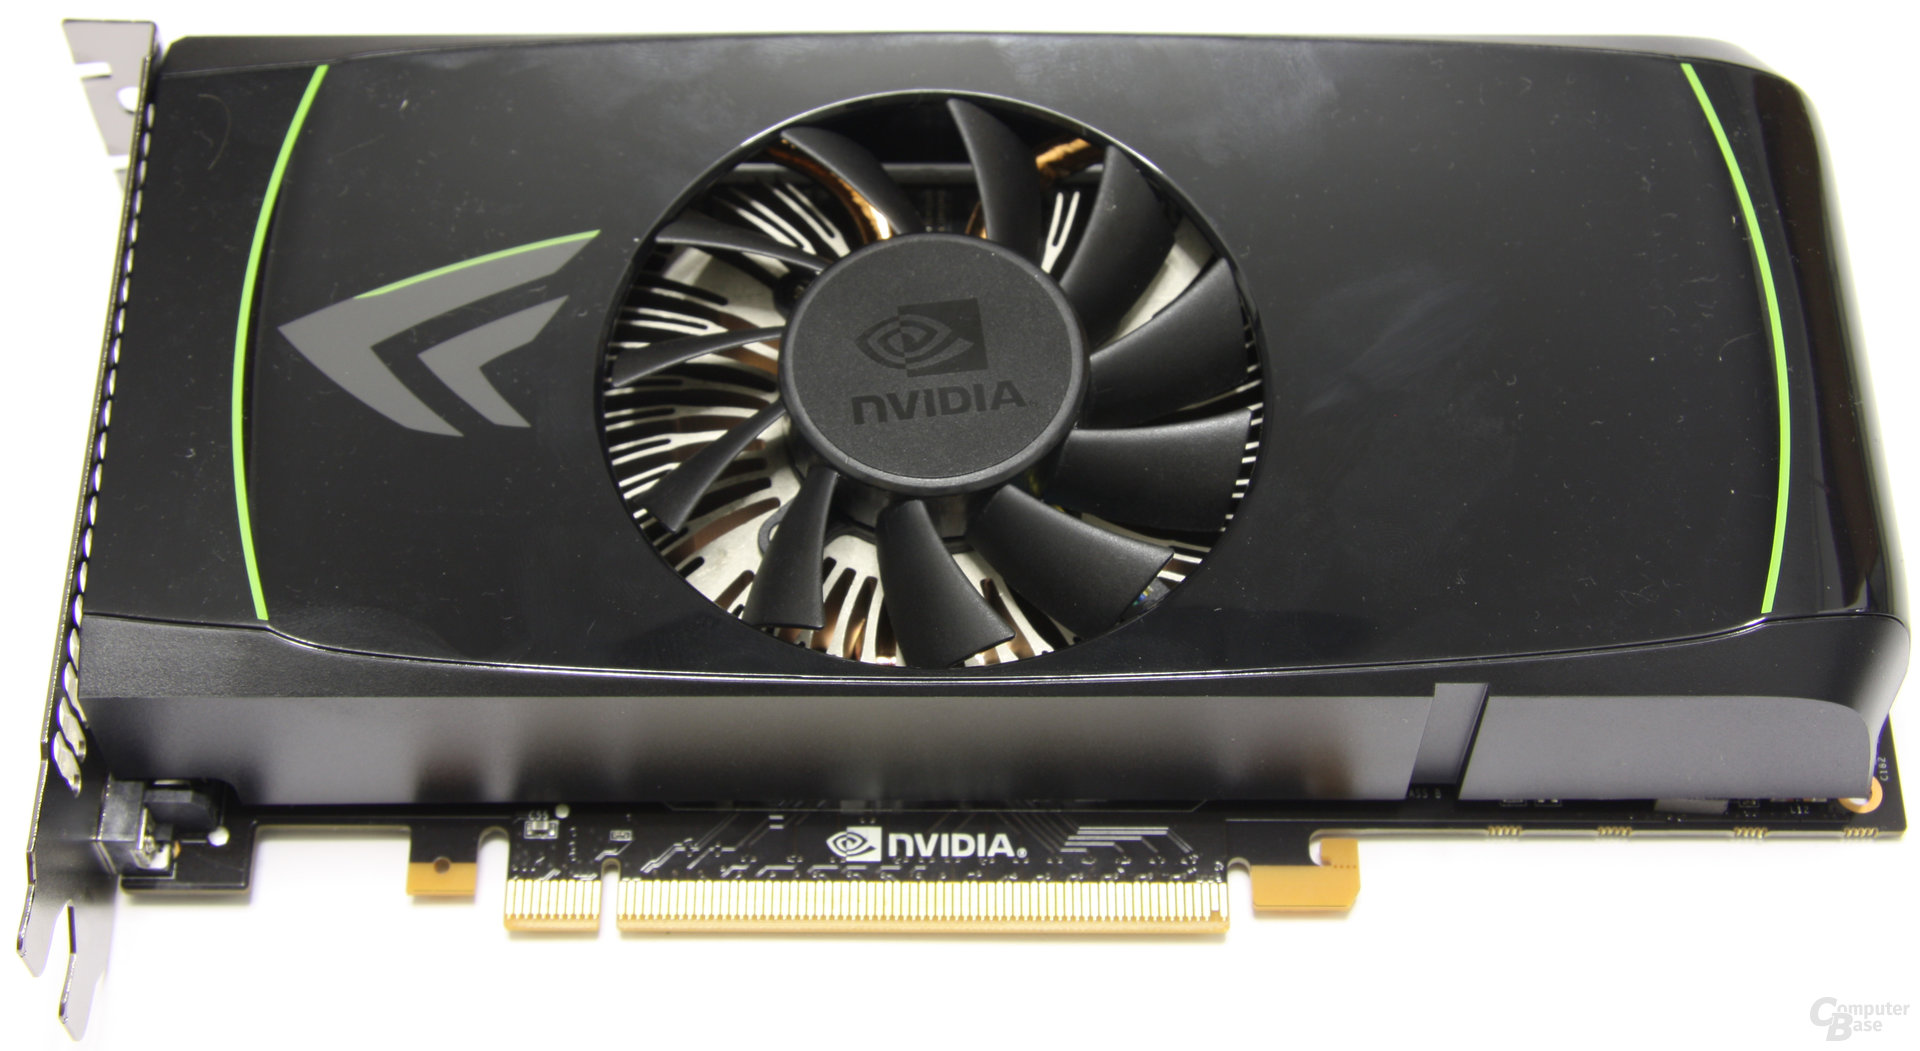 Nvidia GeForce GTX 460 1GB